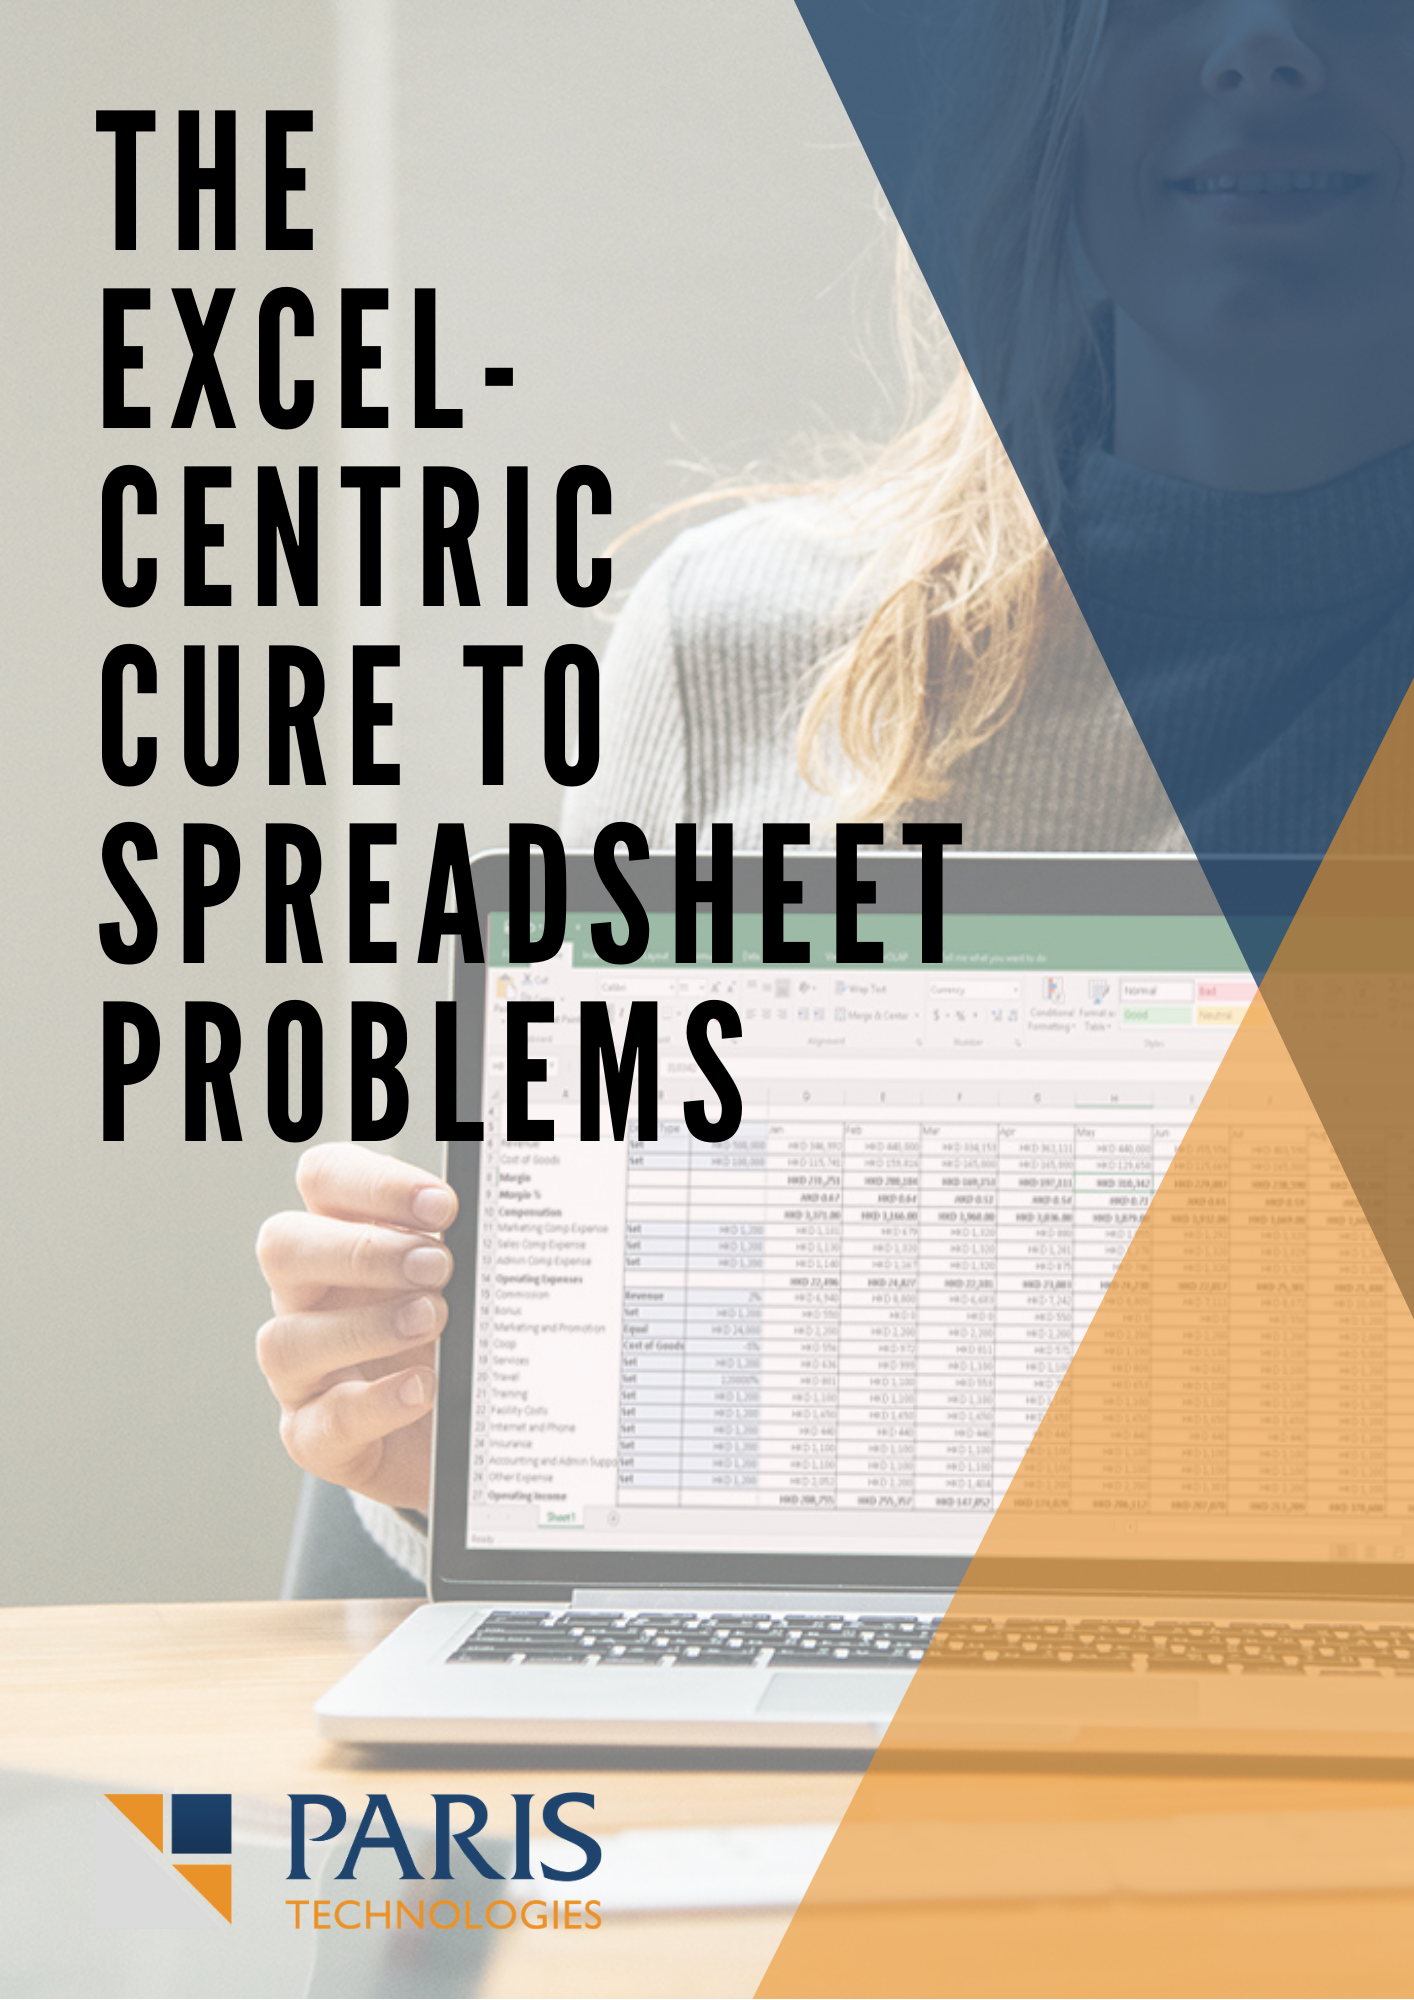 2019 Spreadsheet Problems Whitepaper